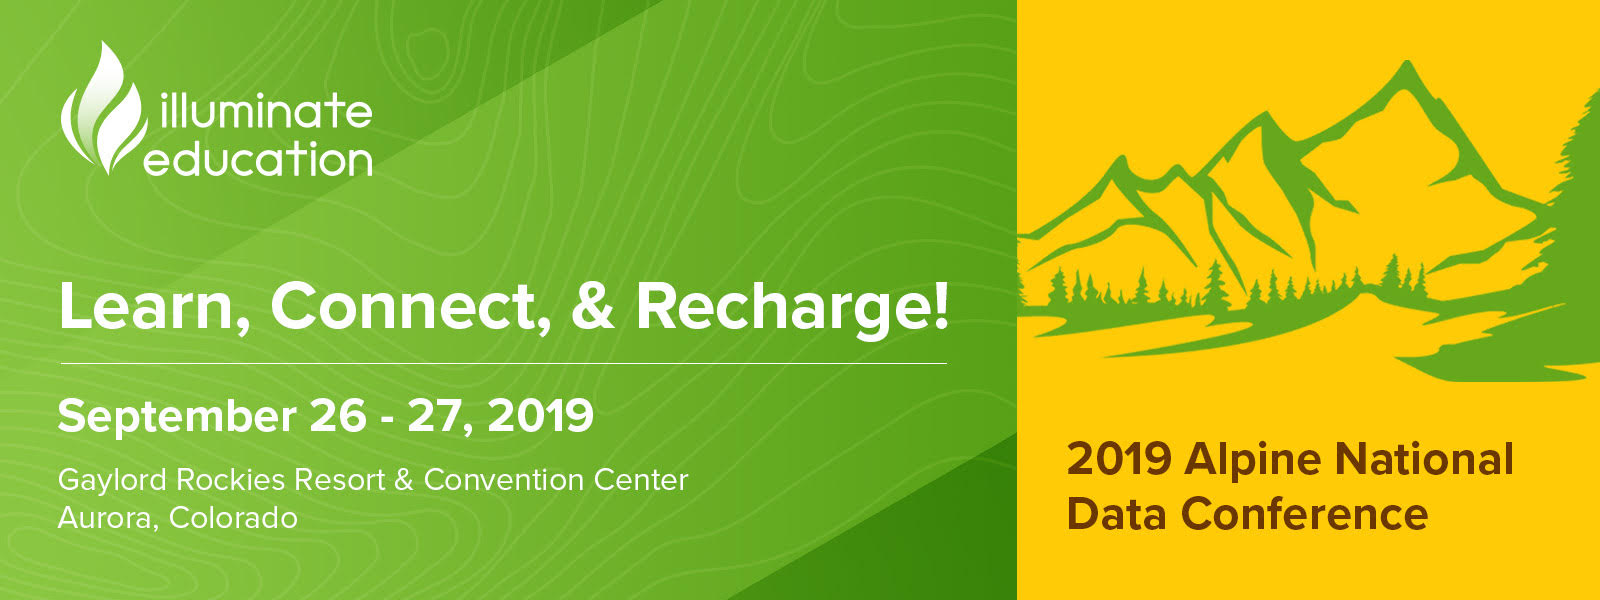 2019 Alpine National Data Conference landing page header banner